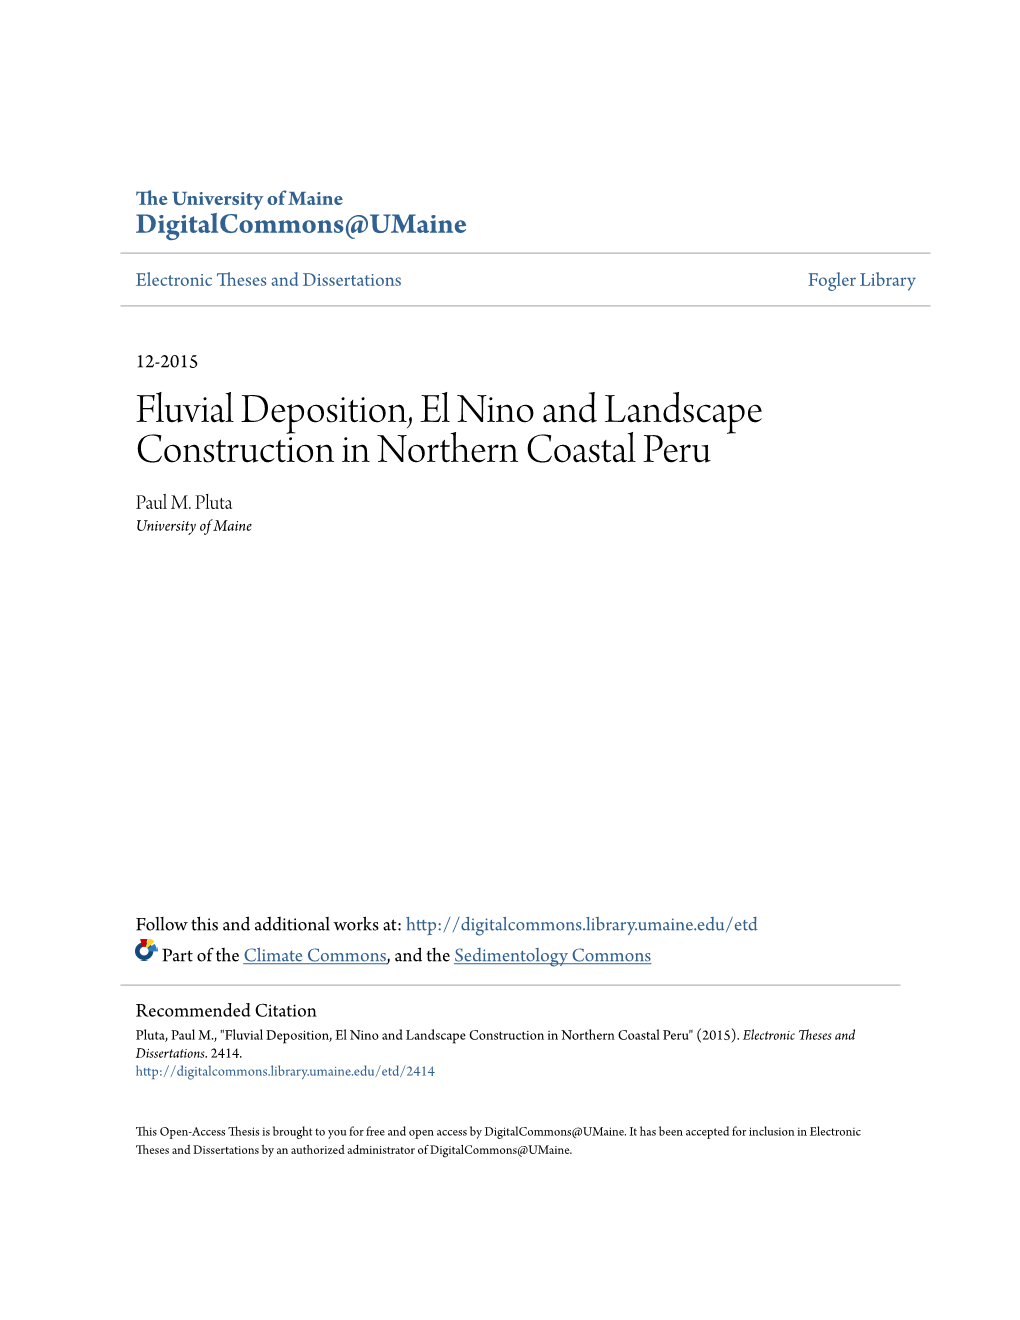 Fluvial Deposition, El Nino and Landscape Construction in Northern Coastal Peru Paul M